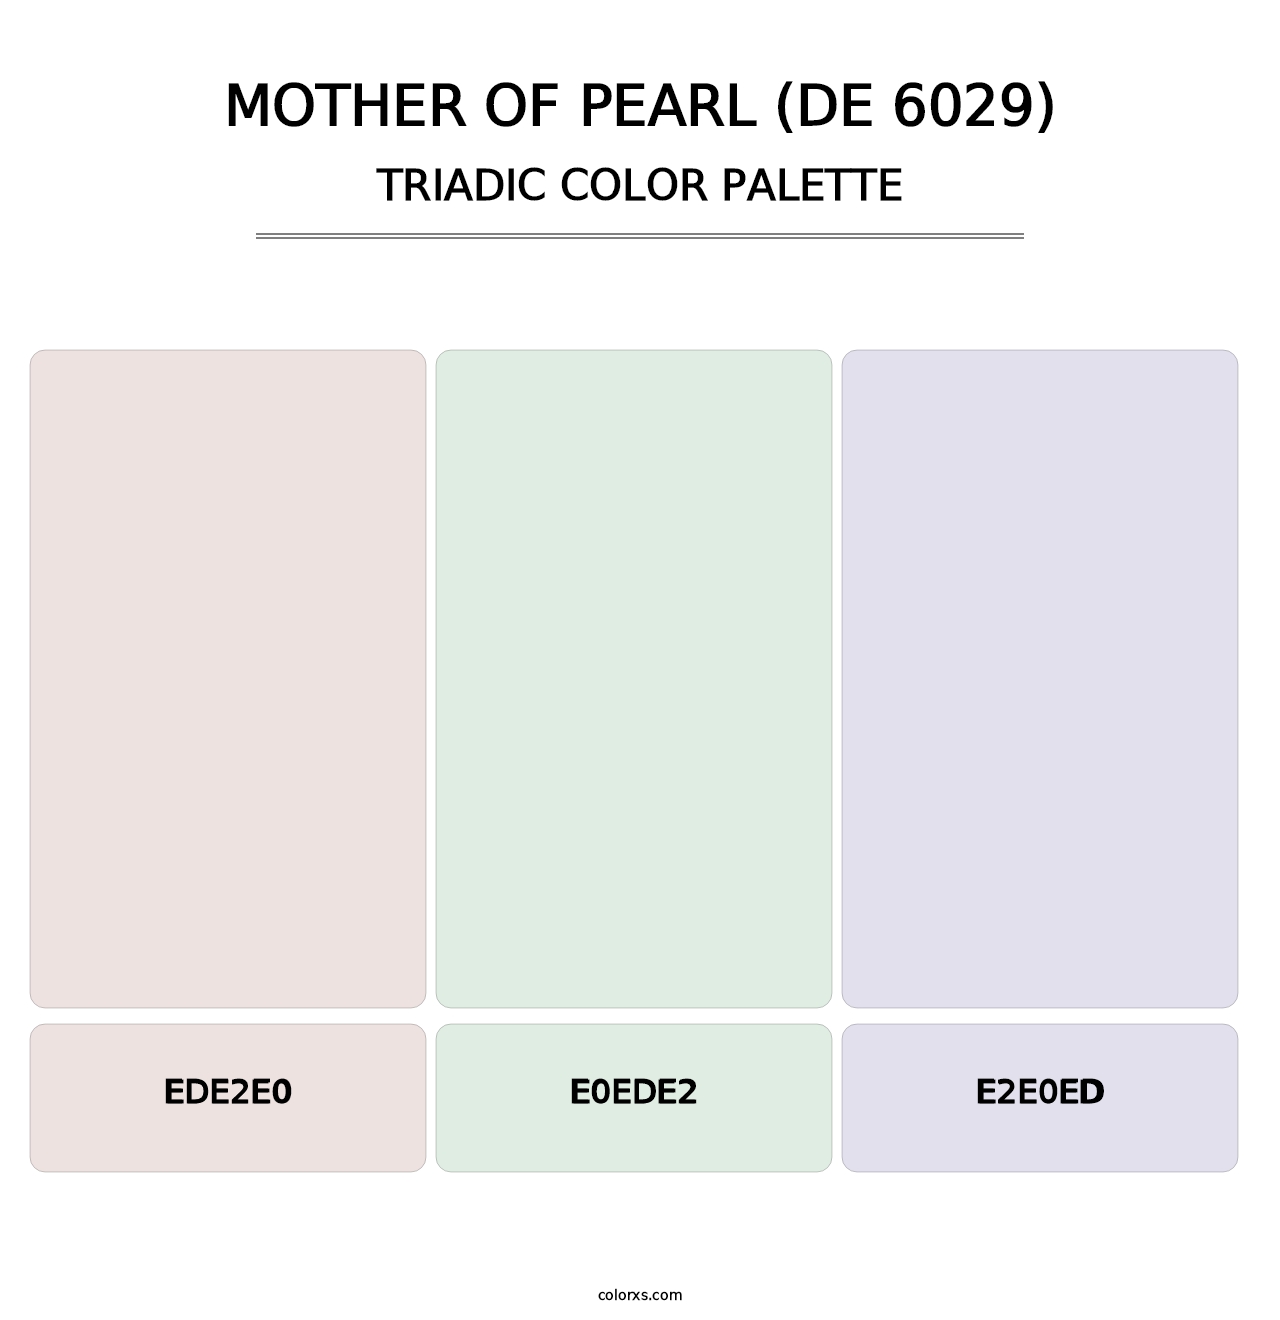 Mother of Pearl (DE 6029) - Triadic Color Palette